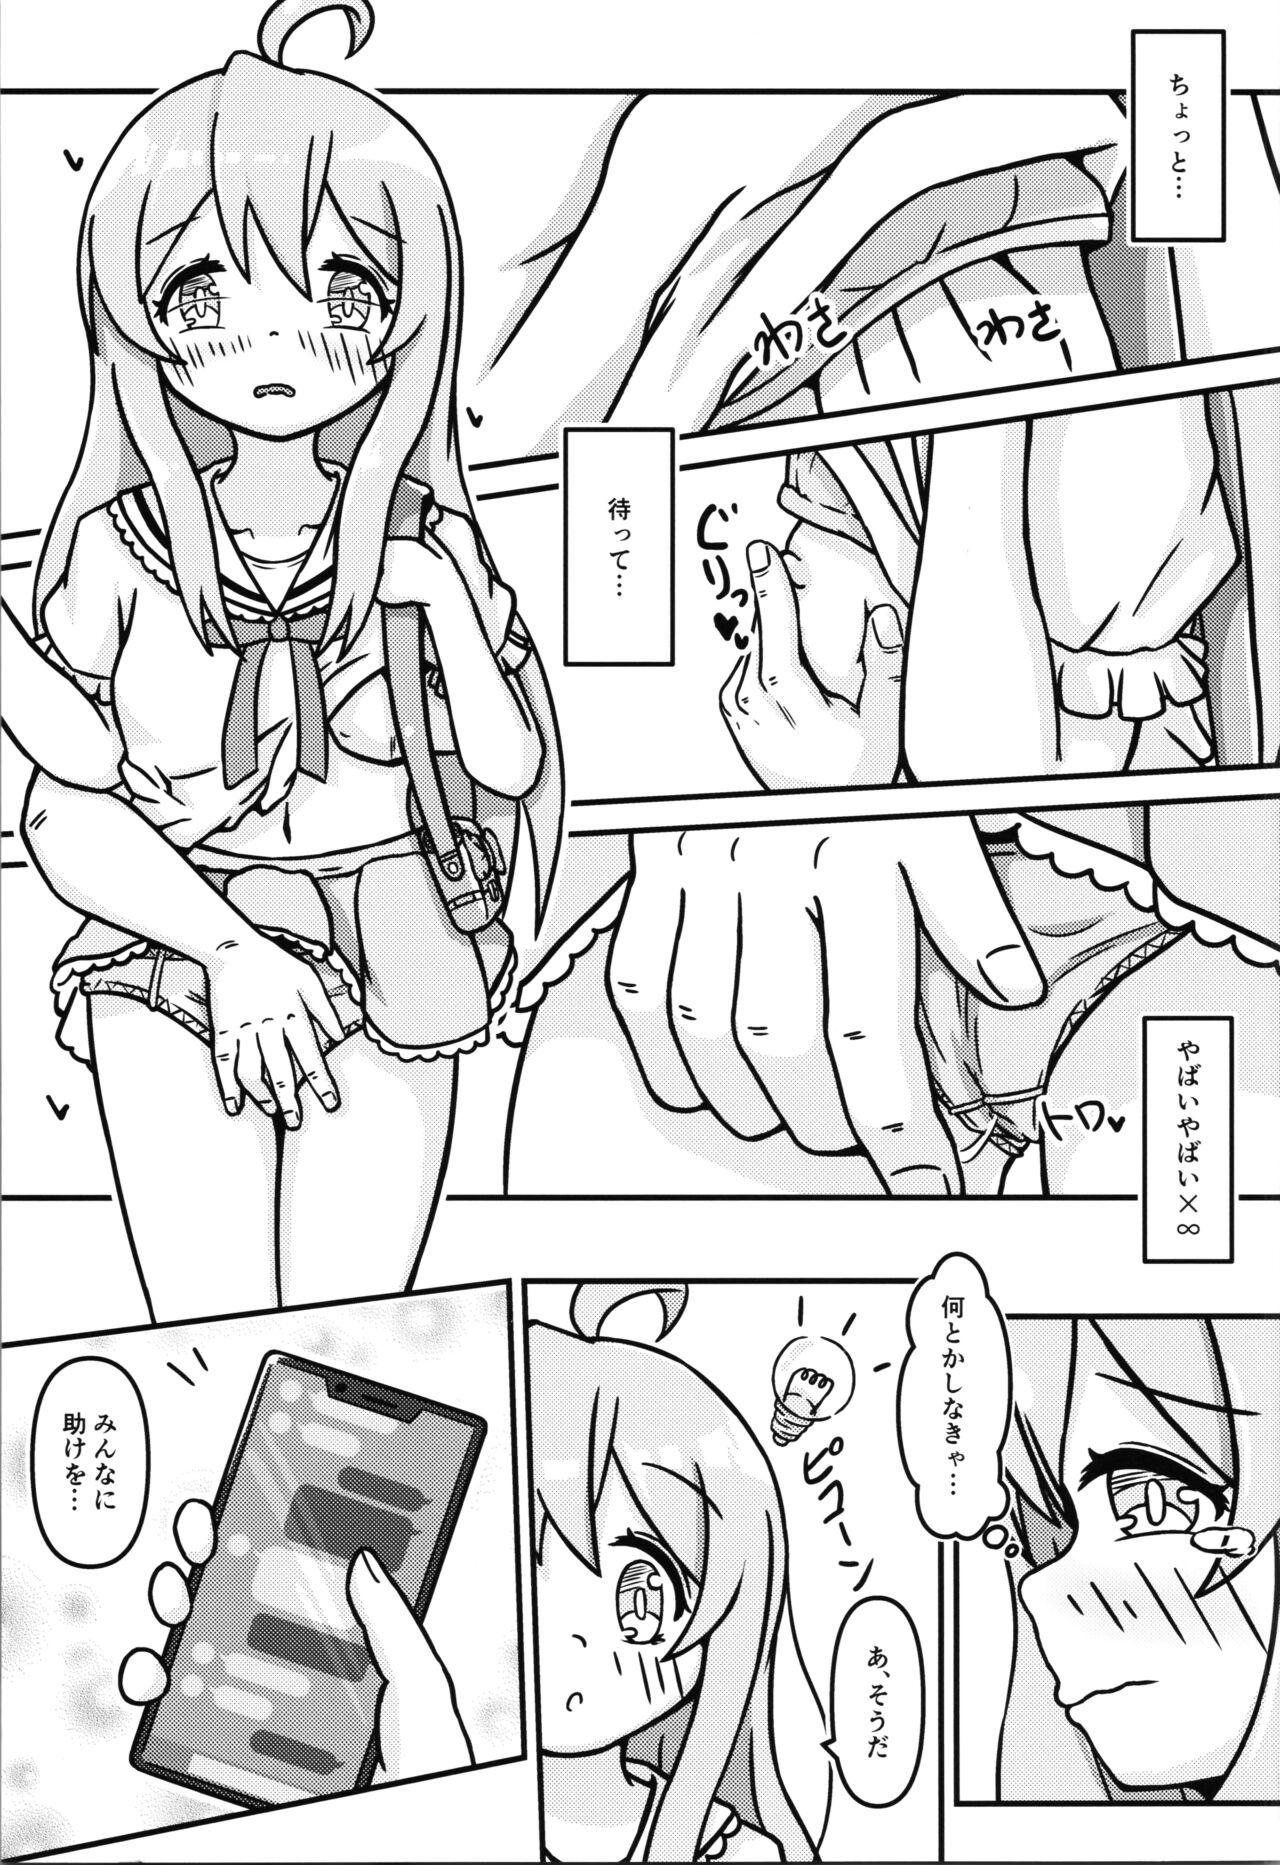 Mahiro-chan's bouncy ××× experience 8